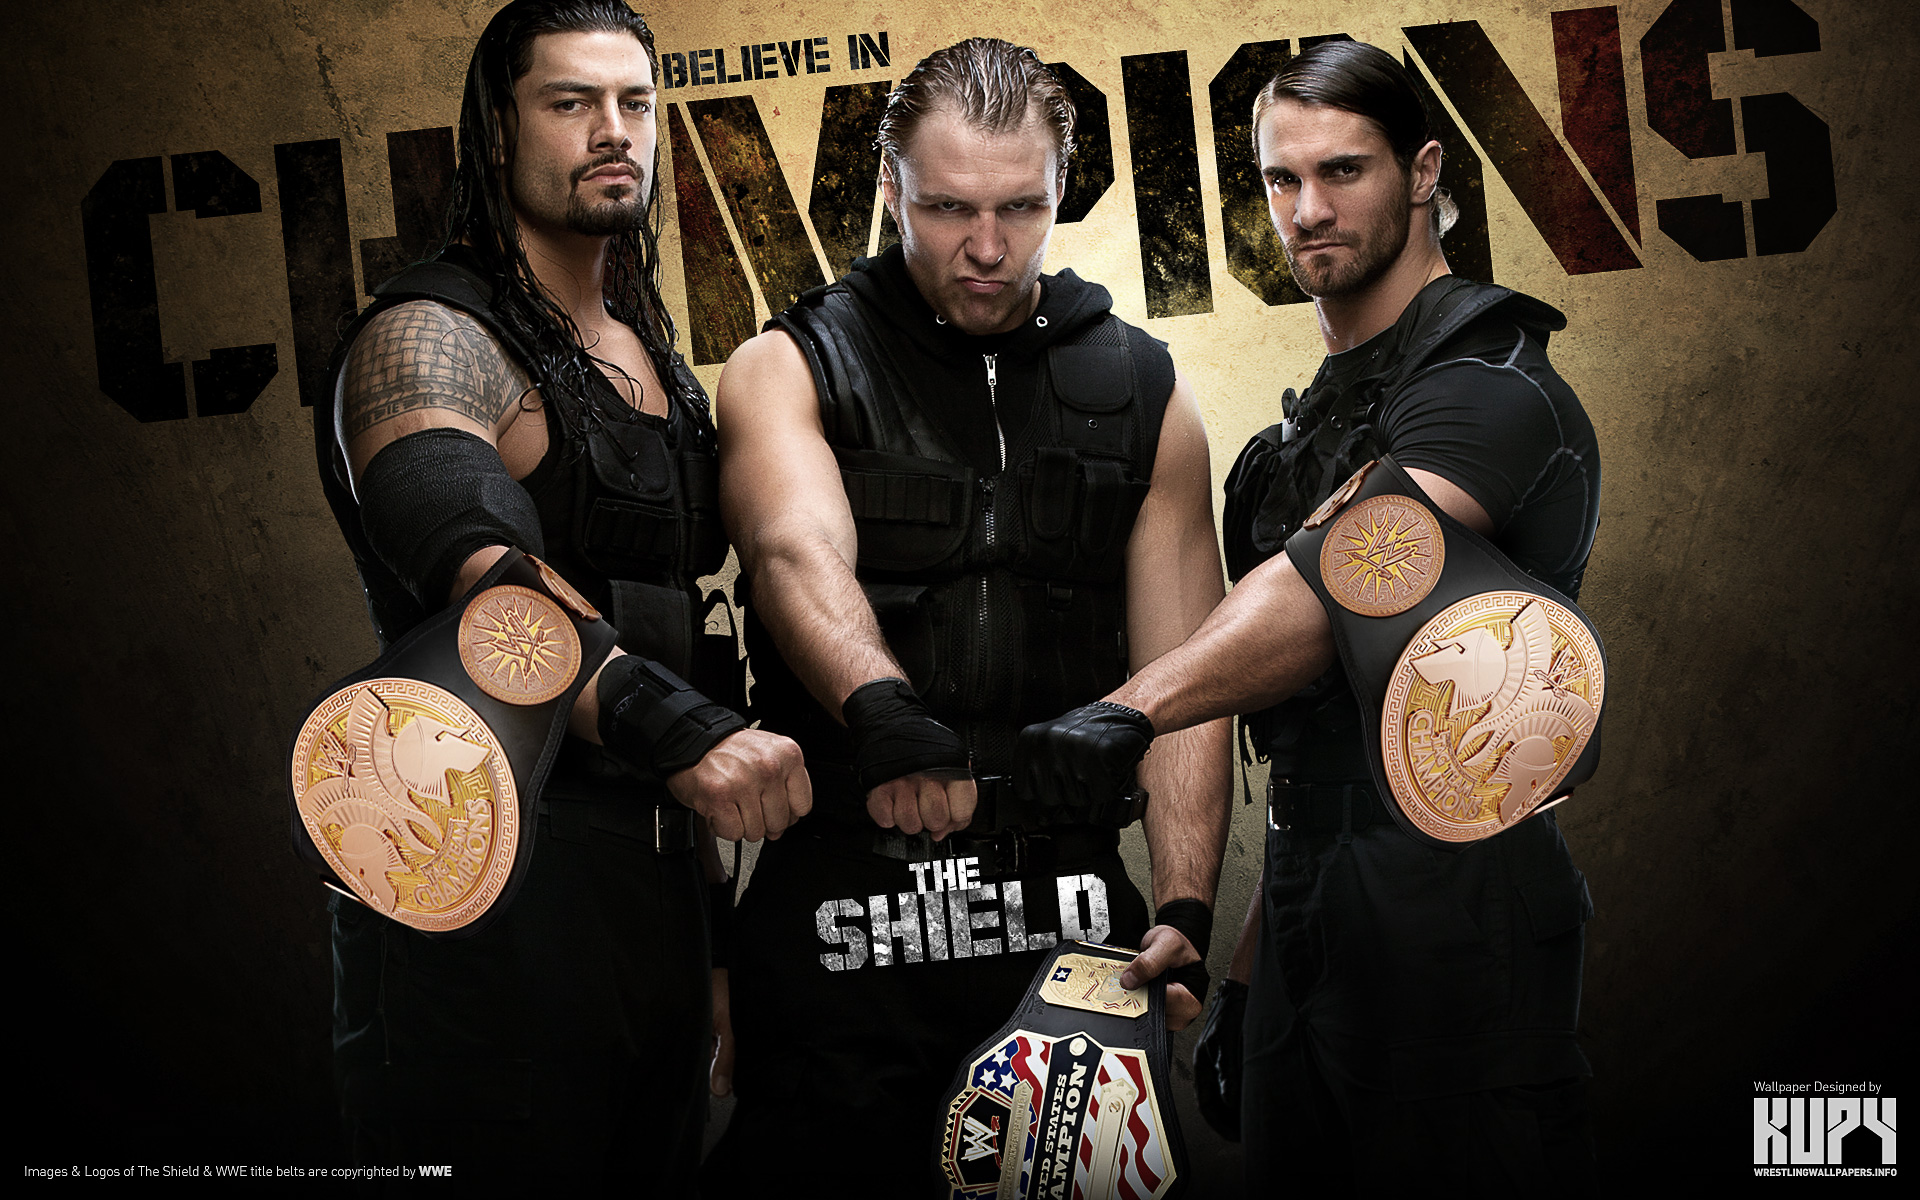 The Shield #7